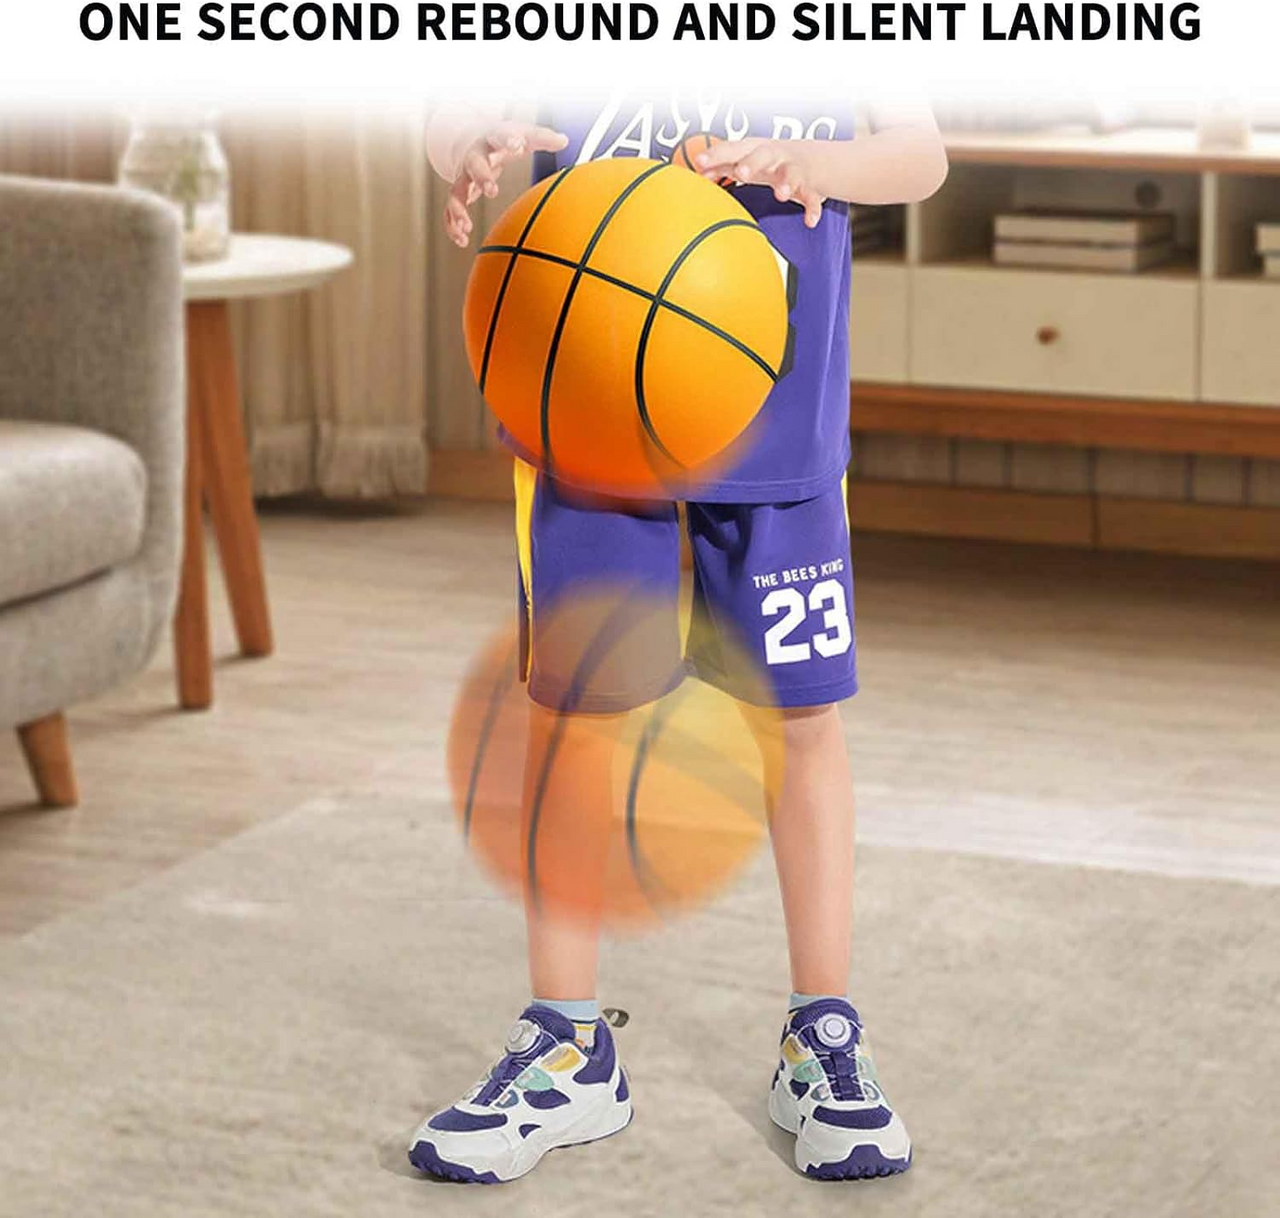 Minge de Basket fara Zgomot pentru Joaca in Casa